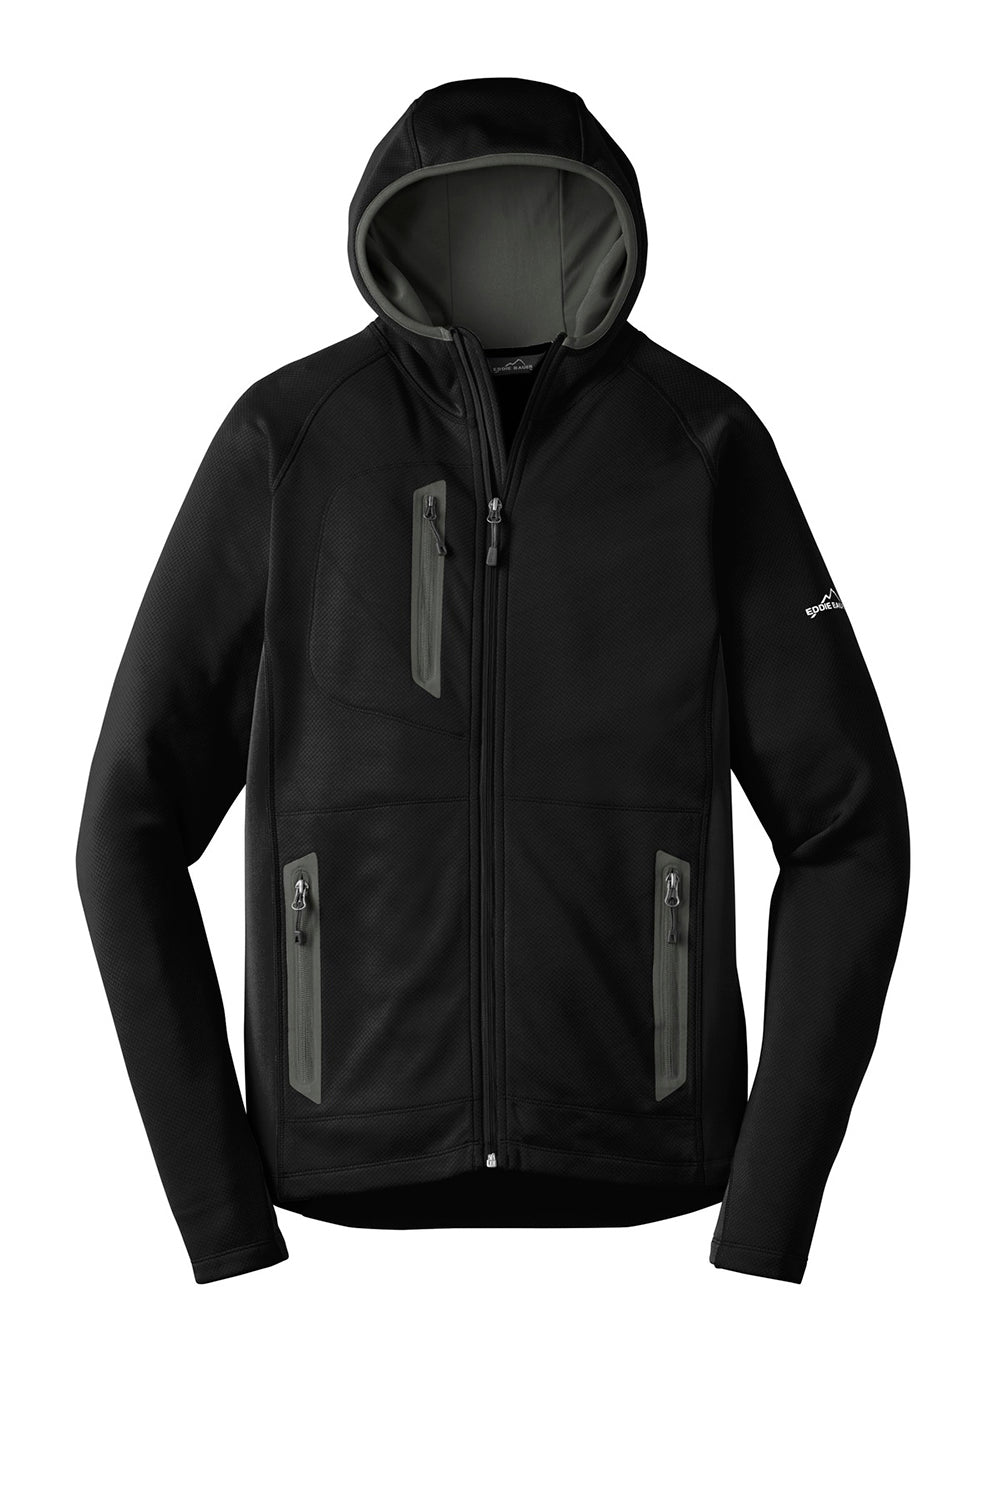 Eddie Bauer EB244 Mens Sport Pill Resistant Fleece Full Zip Hooded Jacket Black Flat Front